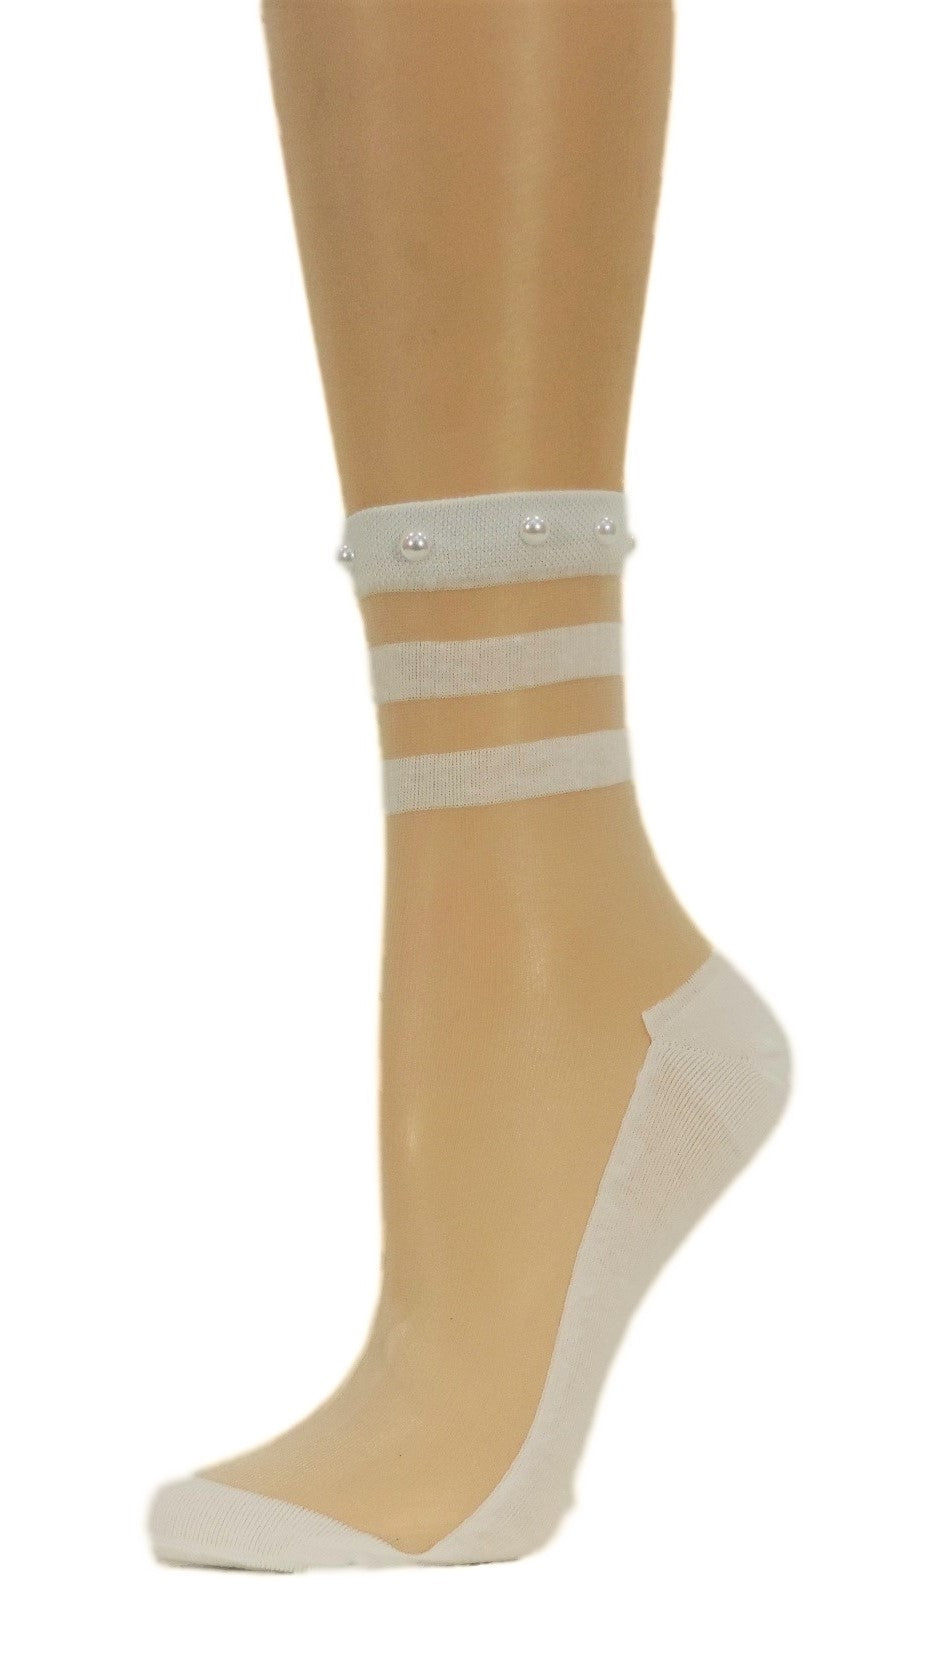 Classy White Striped Custom Sheer Socks with beads - Global Trendz Fashion®